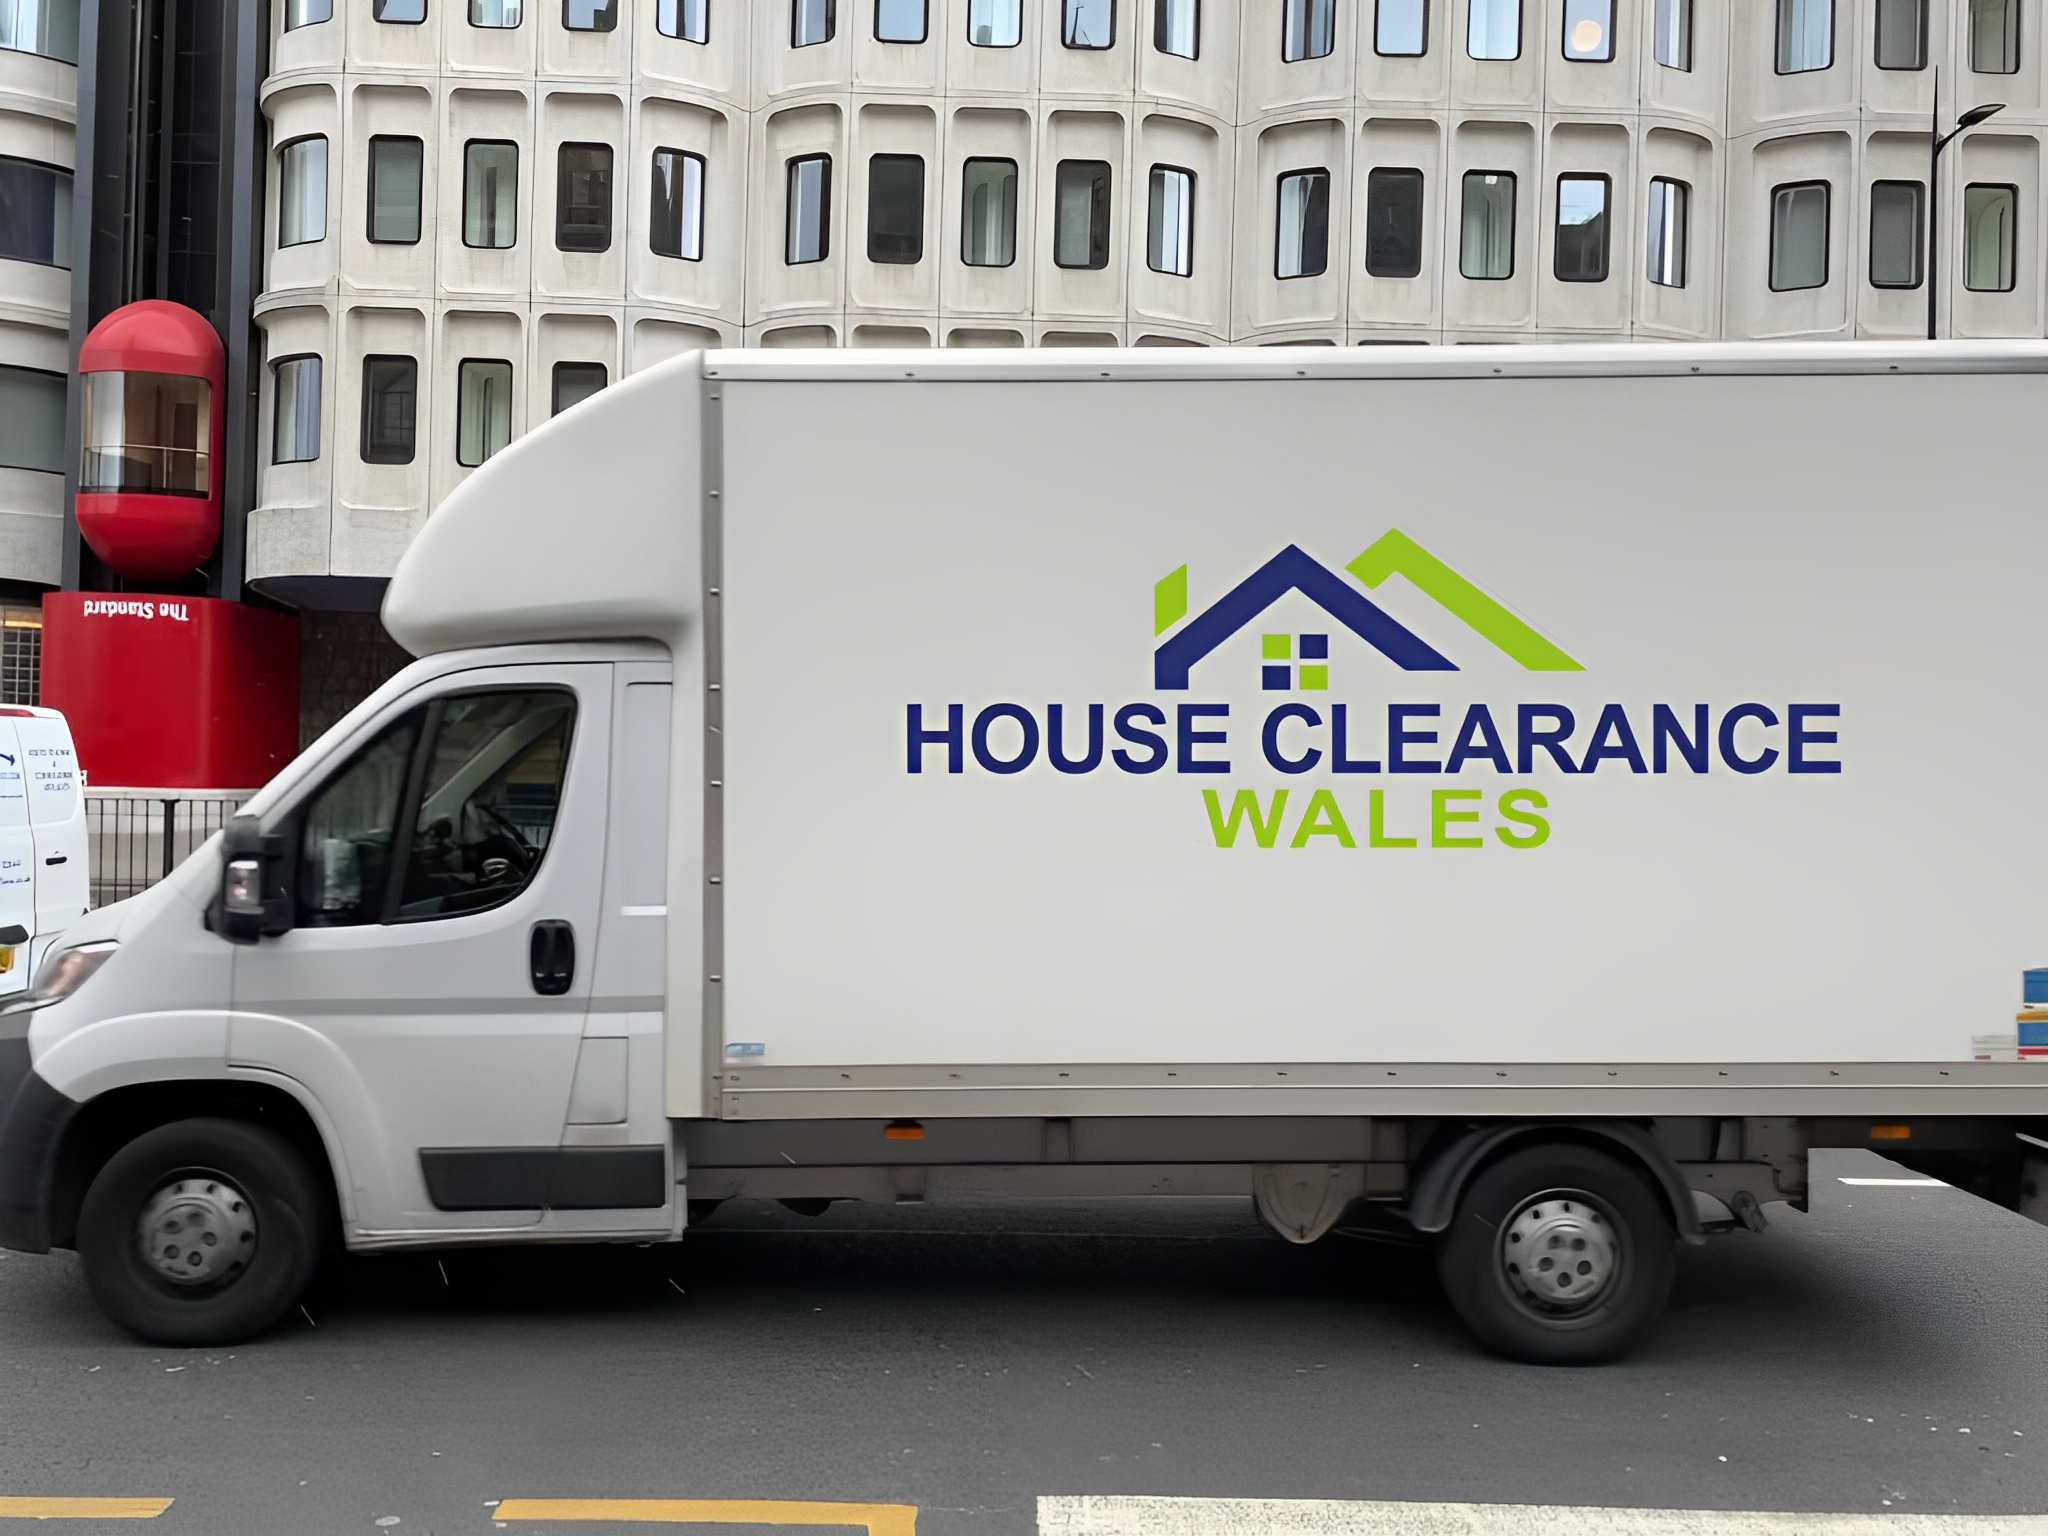 House Clearance wales slide